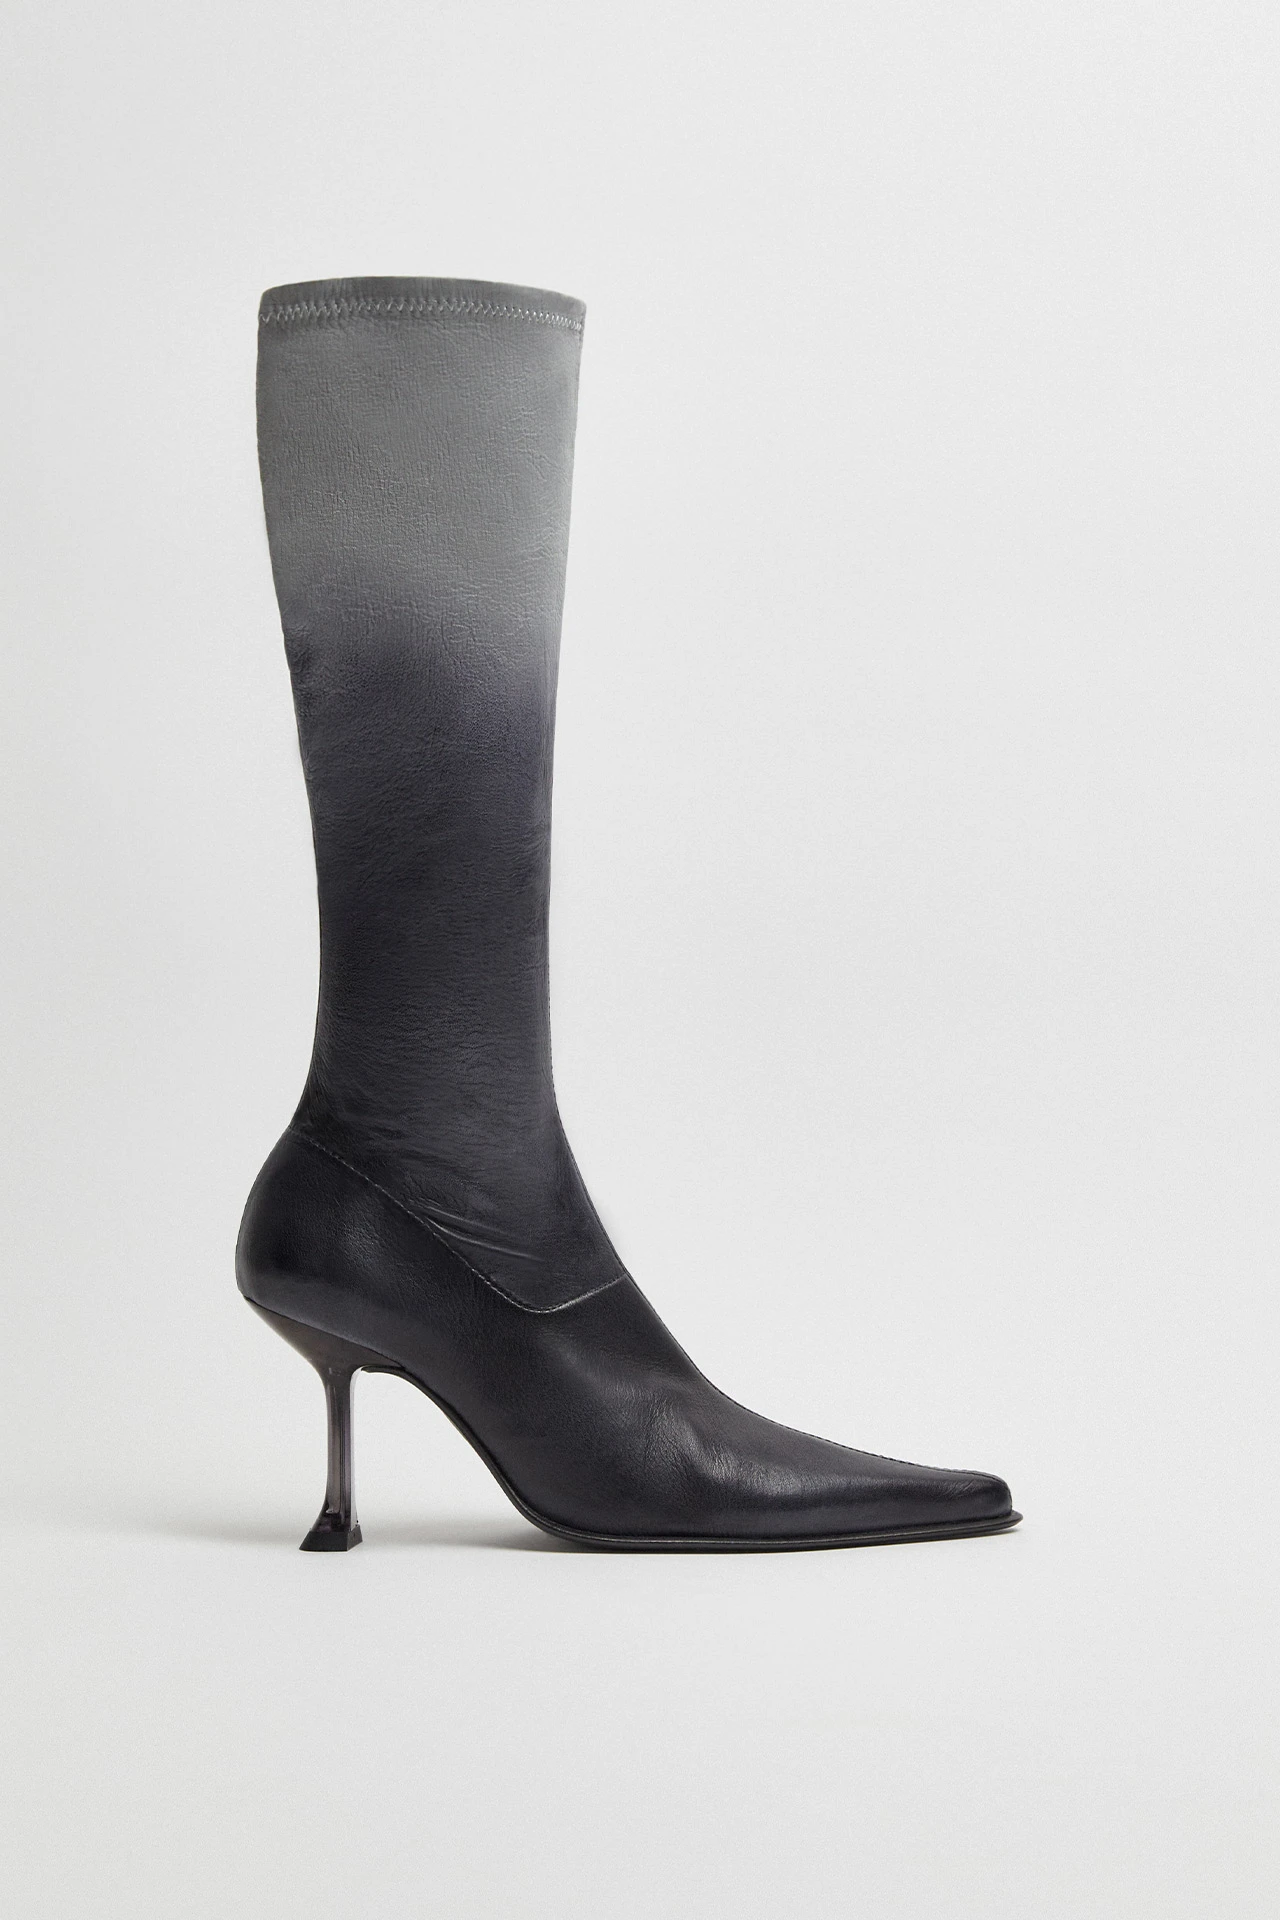 Miista-carlita-grey-tall-boots-01